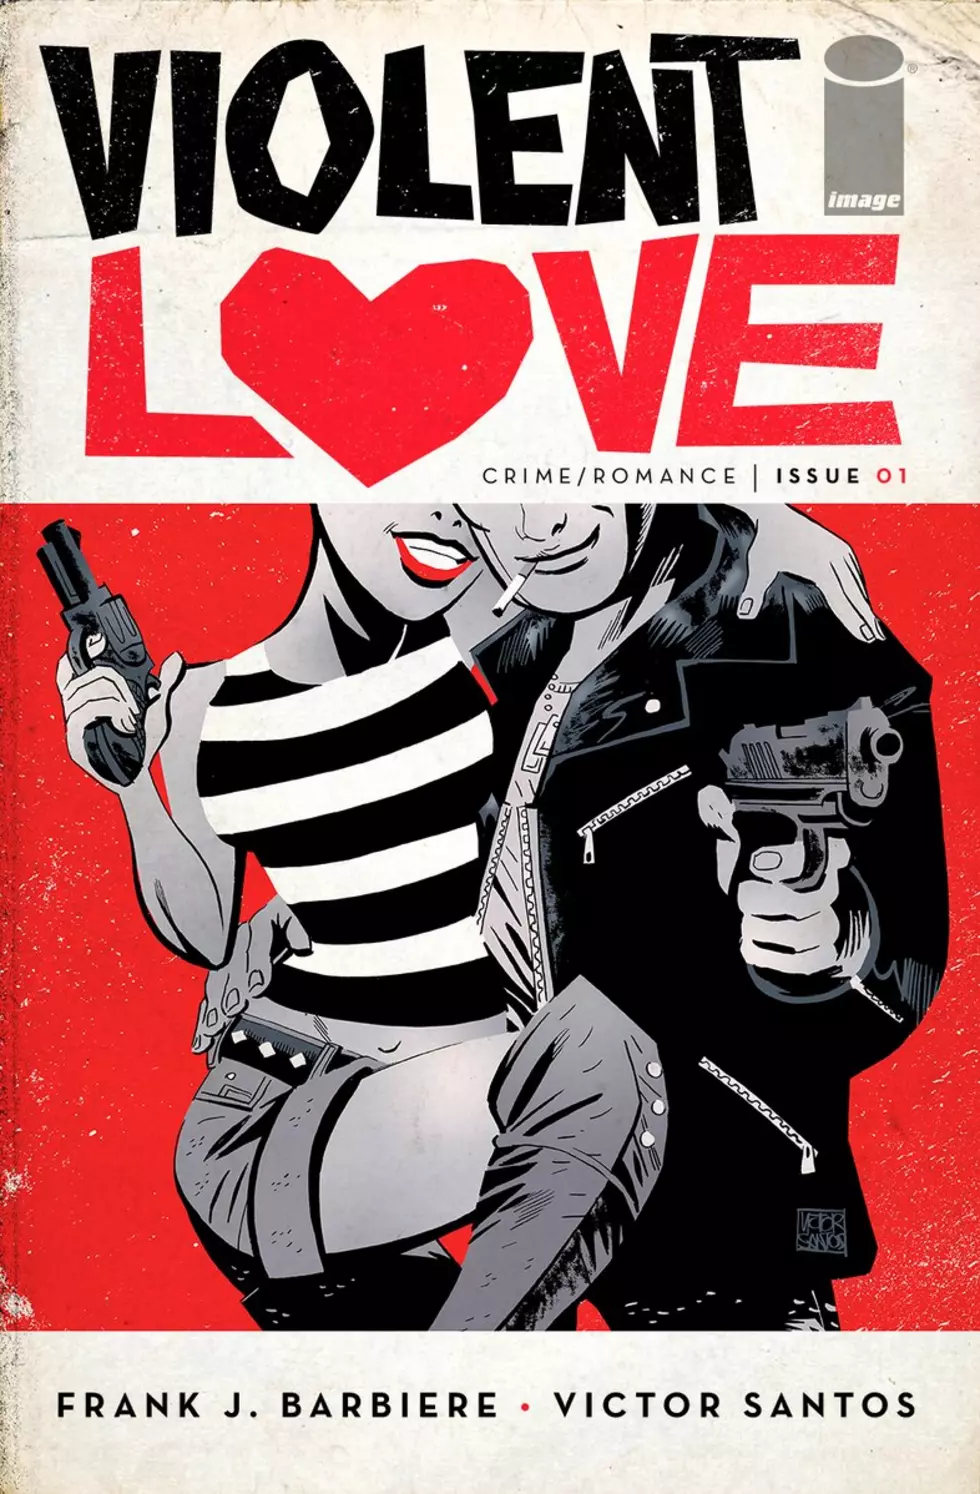 Frank J. Barbiere And Victor Santos Bring &#8216;Violent Love&#8217; To Image Comics